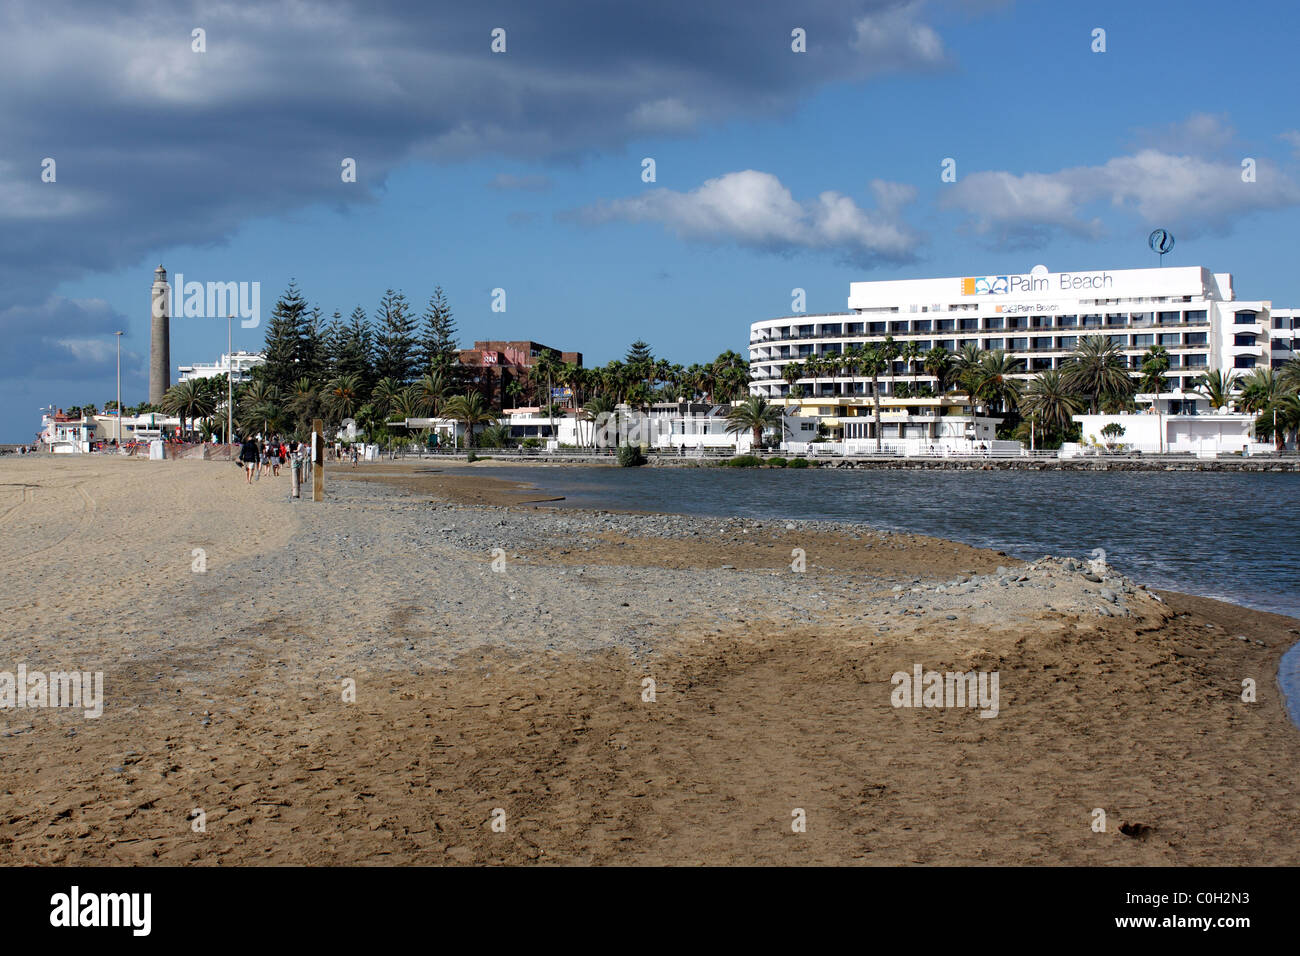 THE PALM BEACH HOTEL AND PLAYA DE MASPALOMAS. GRAN CANARIA. CANARY ISLANDS. Stock Photo